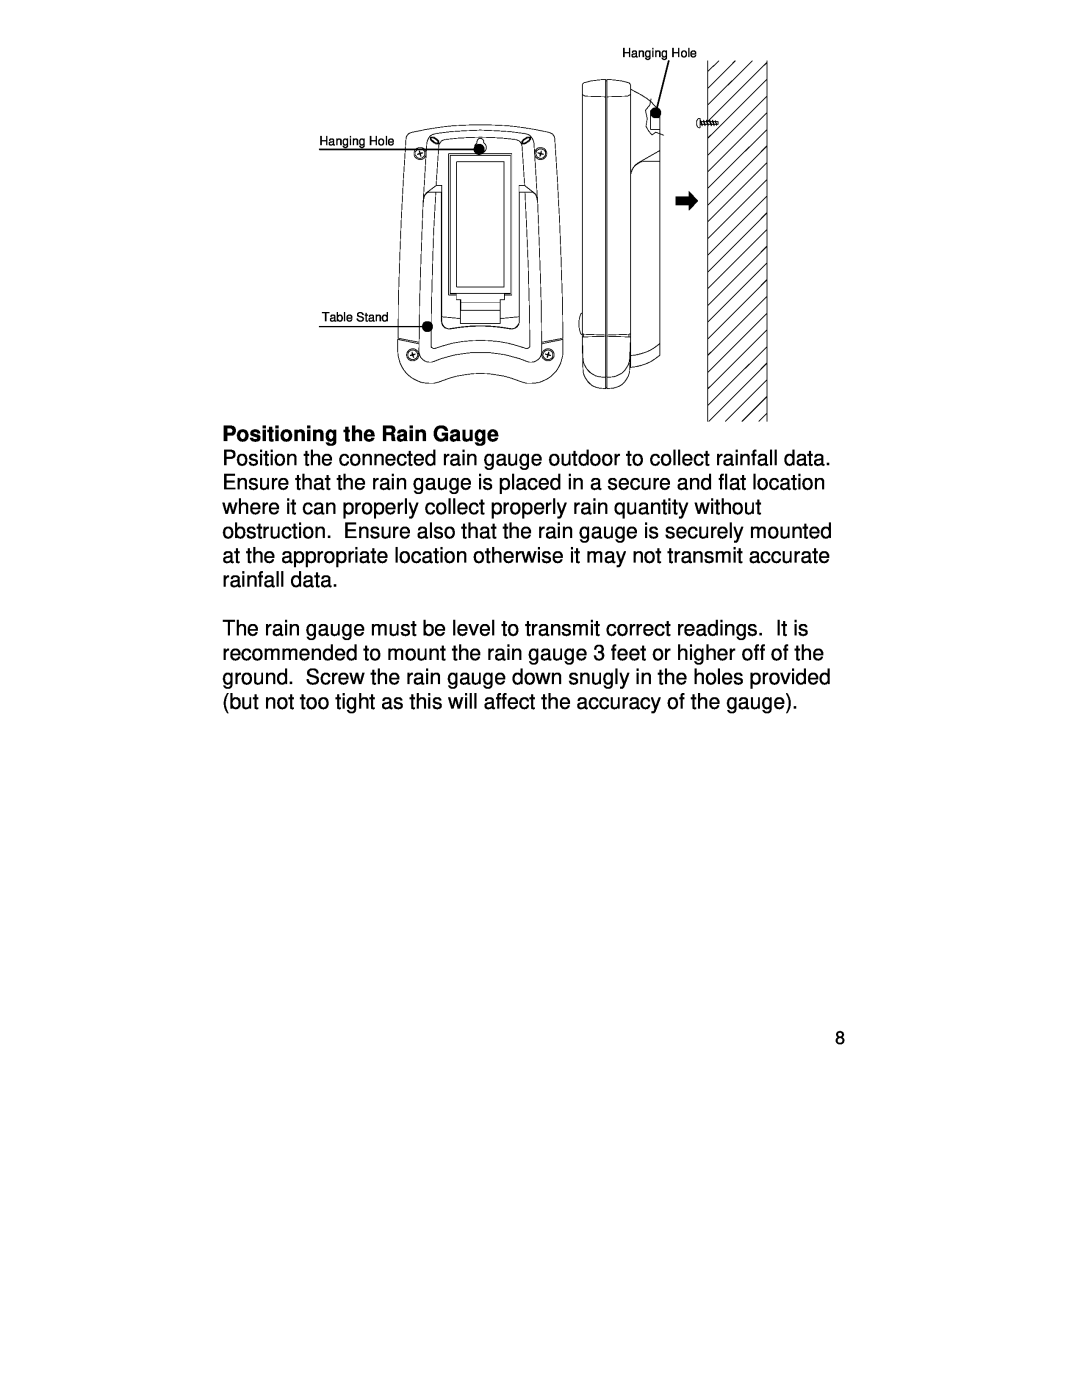 La Crosse Technology WS-9004U instruction manual Positioning the Rain Gauge, Hanging Hole Hanging Hole Table Stand 